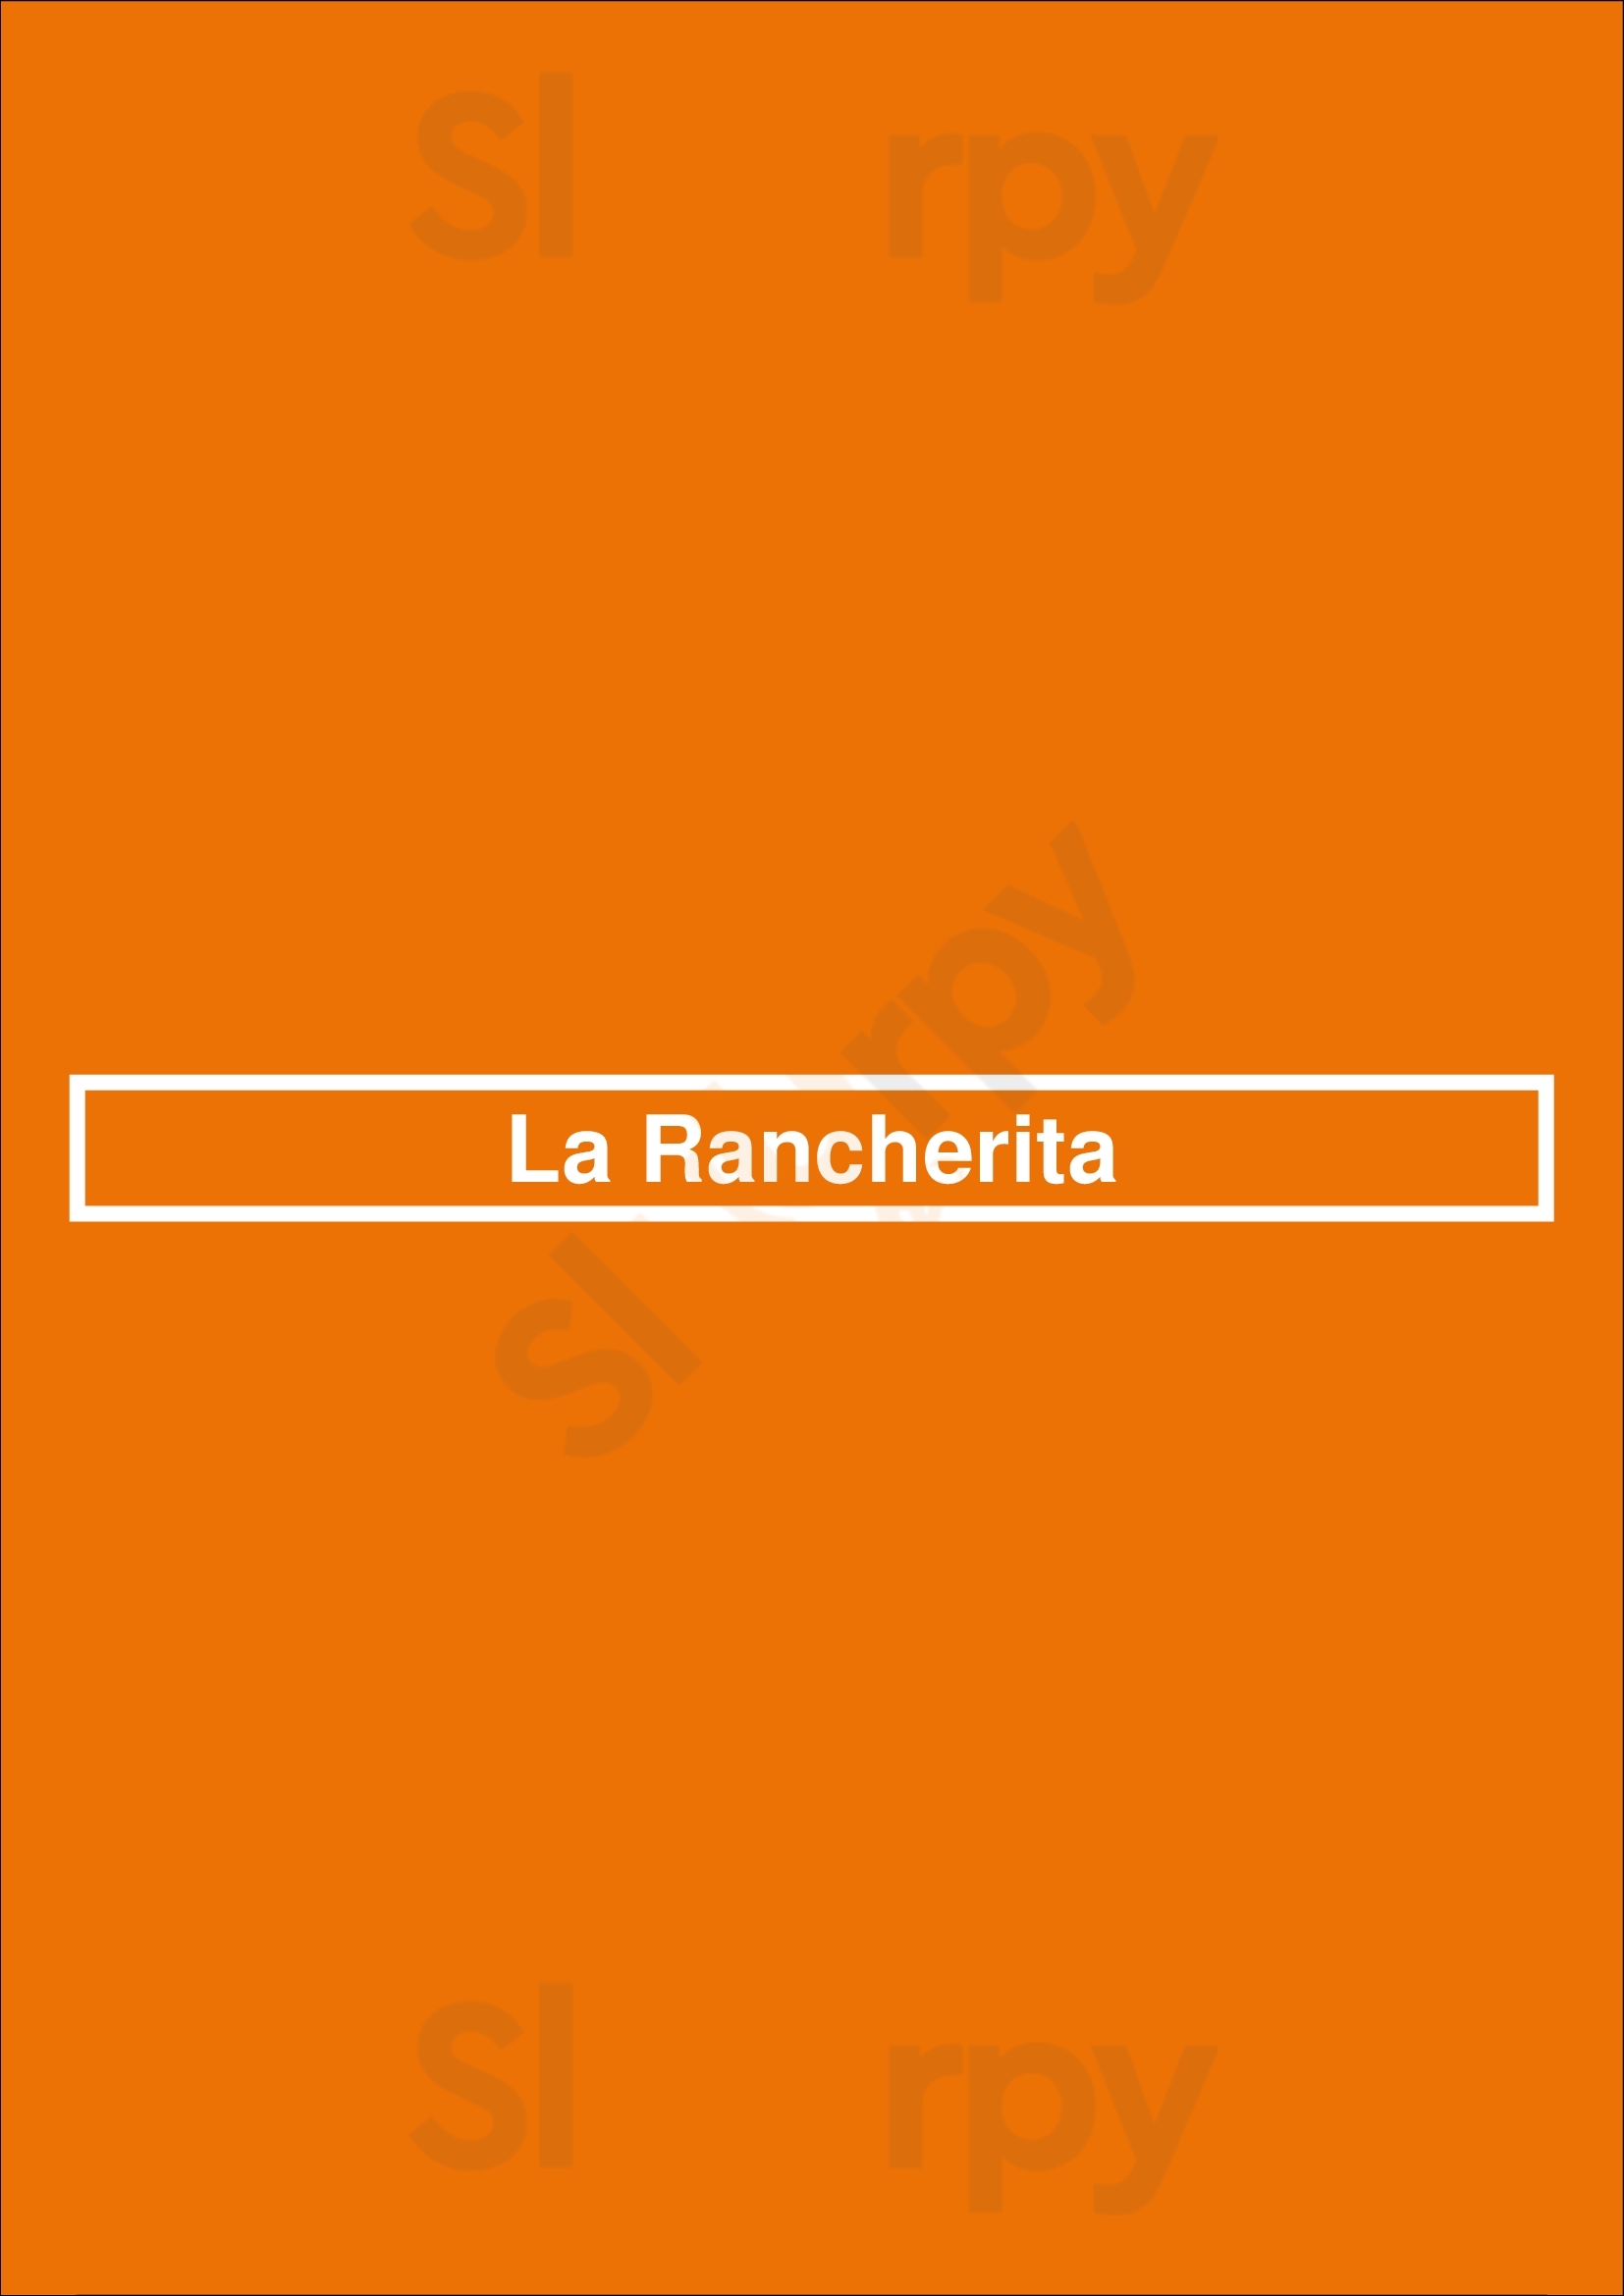 La Rancherita Raleigh Menu - 1